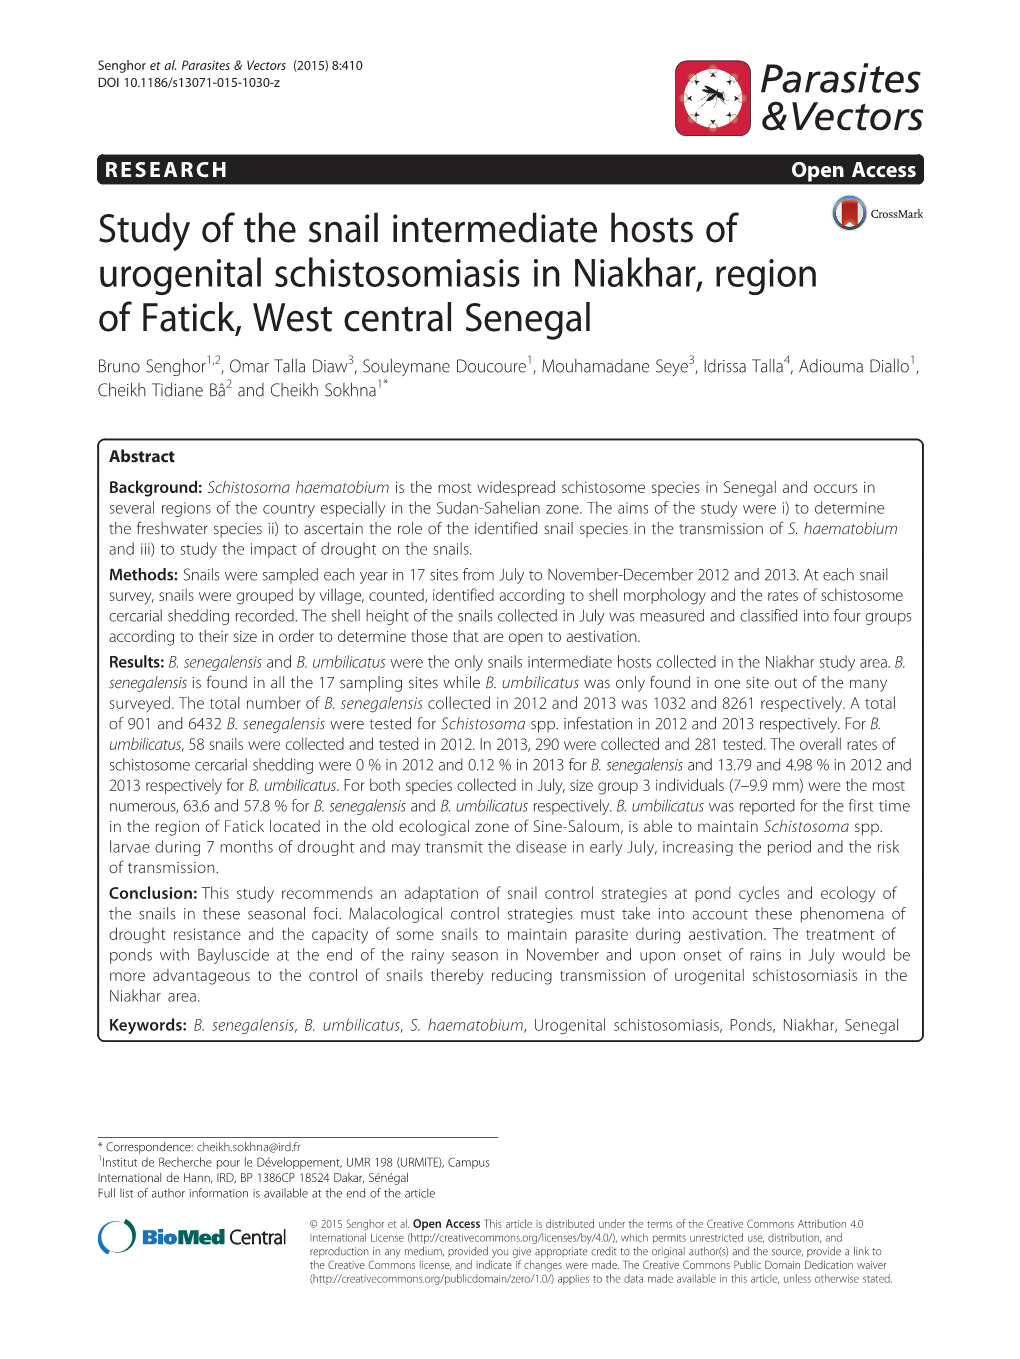 Study of the Snail Intermediate Hosts of Urogenital Schistosomiasis In